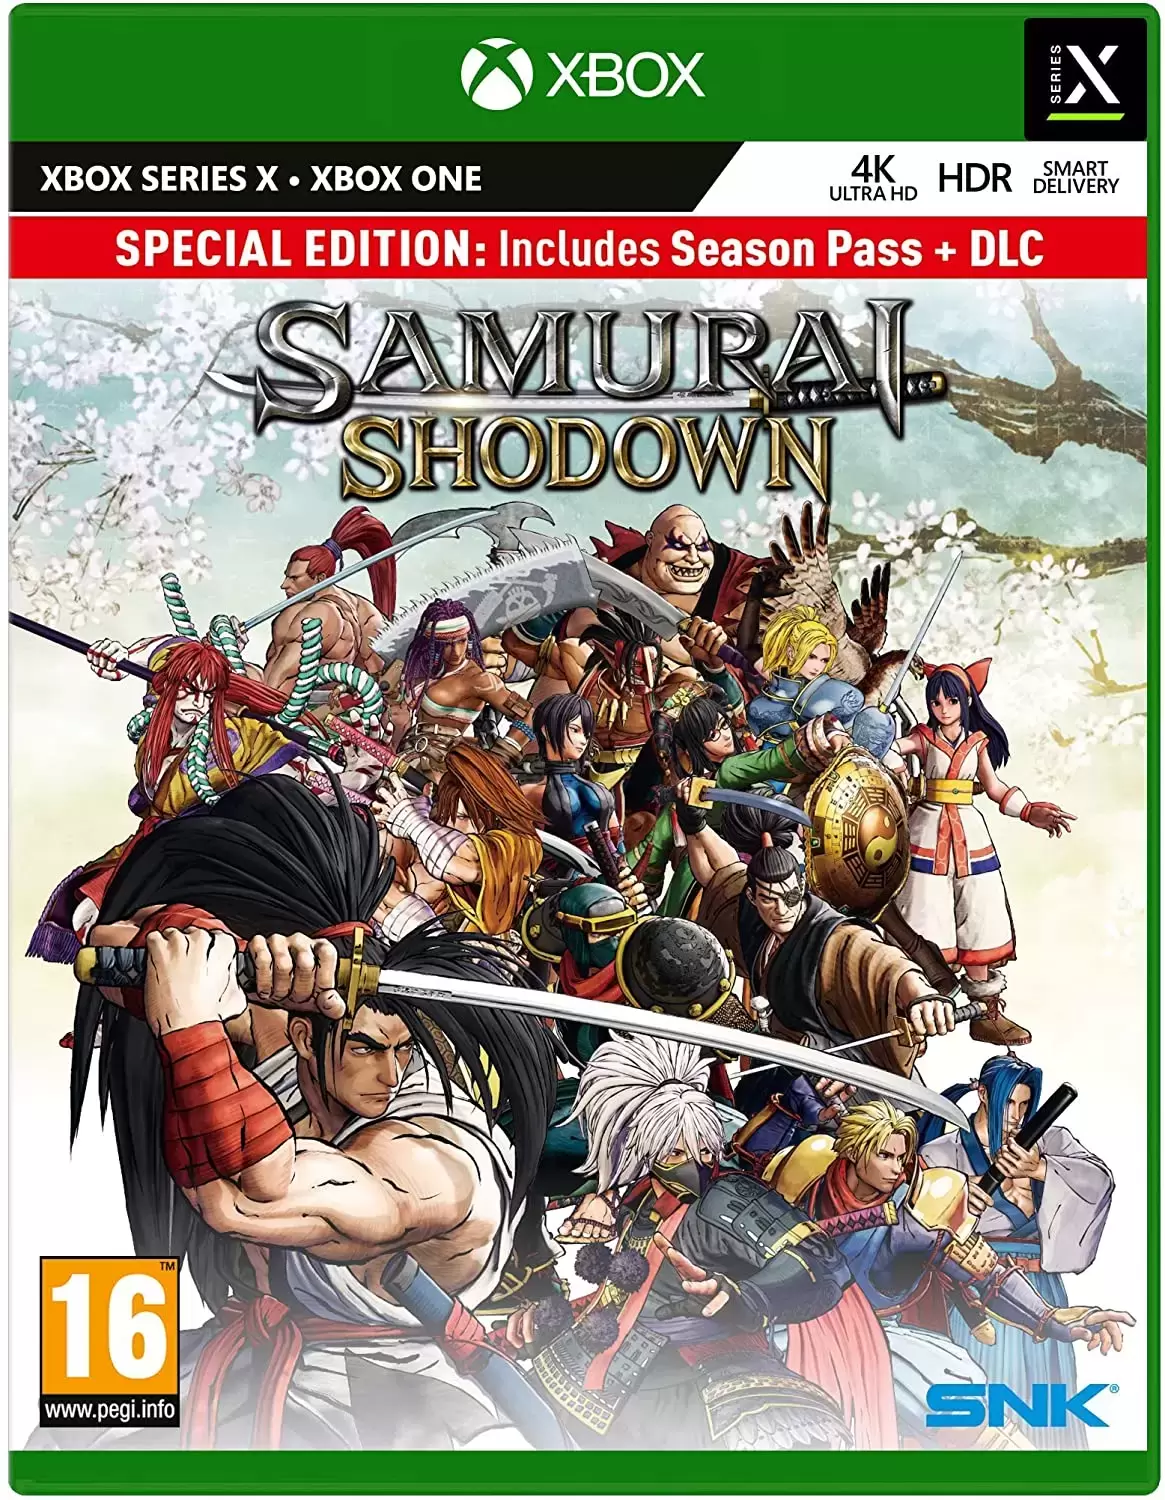 XBOX One Games - Samurai Shodown Special Edition